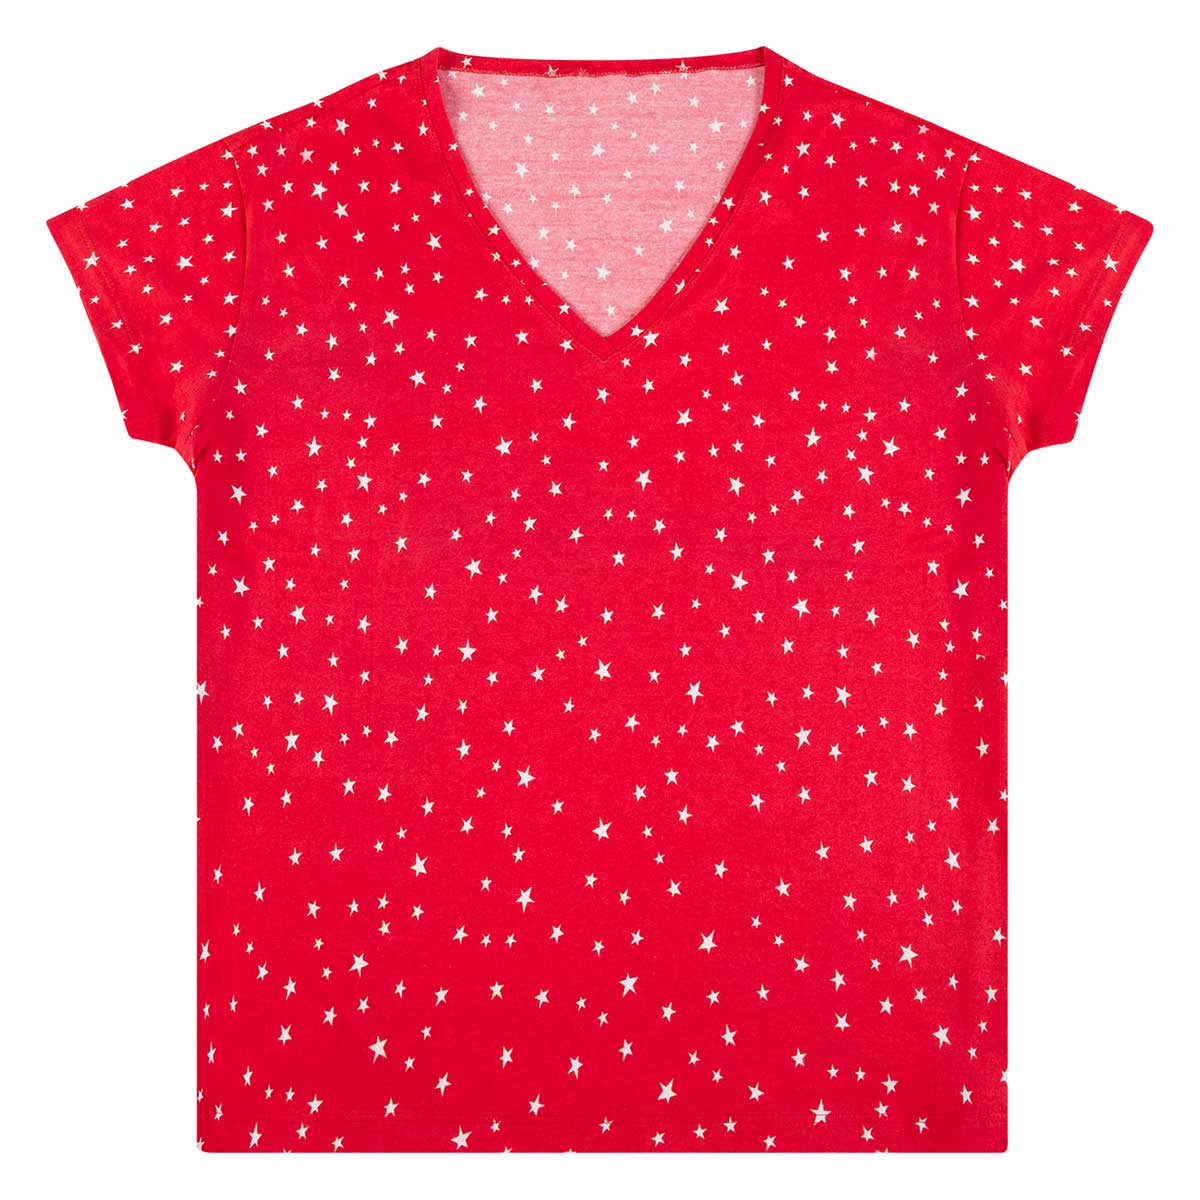 blusa-feminina-gola-v-full-print-hering-folha-vermelho-xg-1.jpg